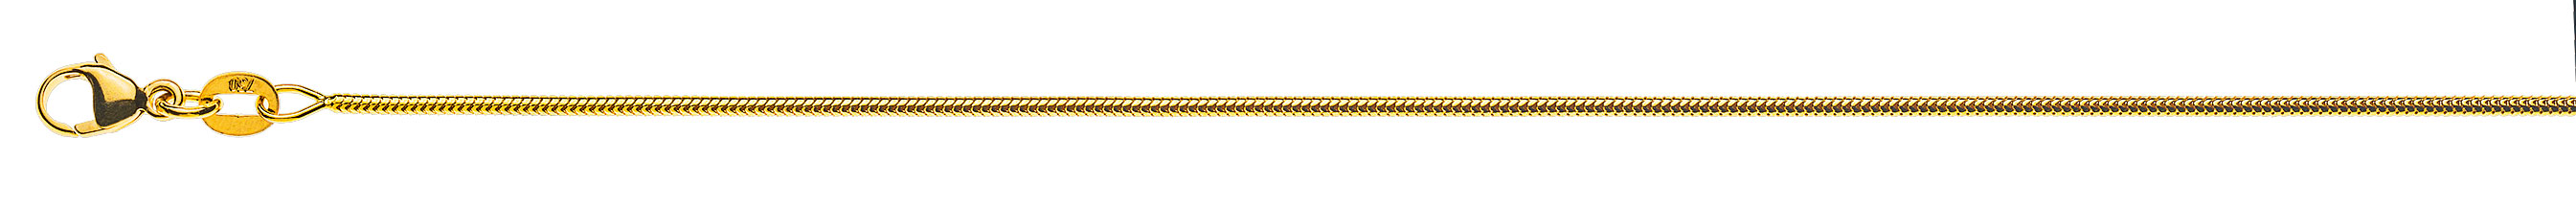 AURONOS Prestige Necklace yellow gold 18K snake chain 55cm 1.2mm